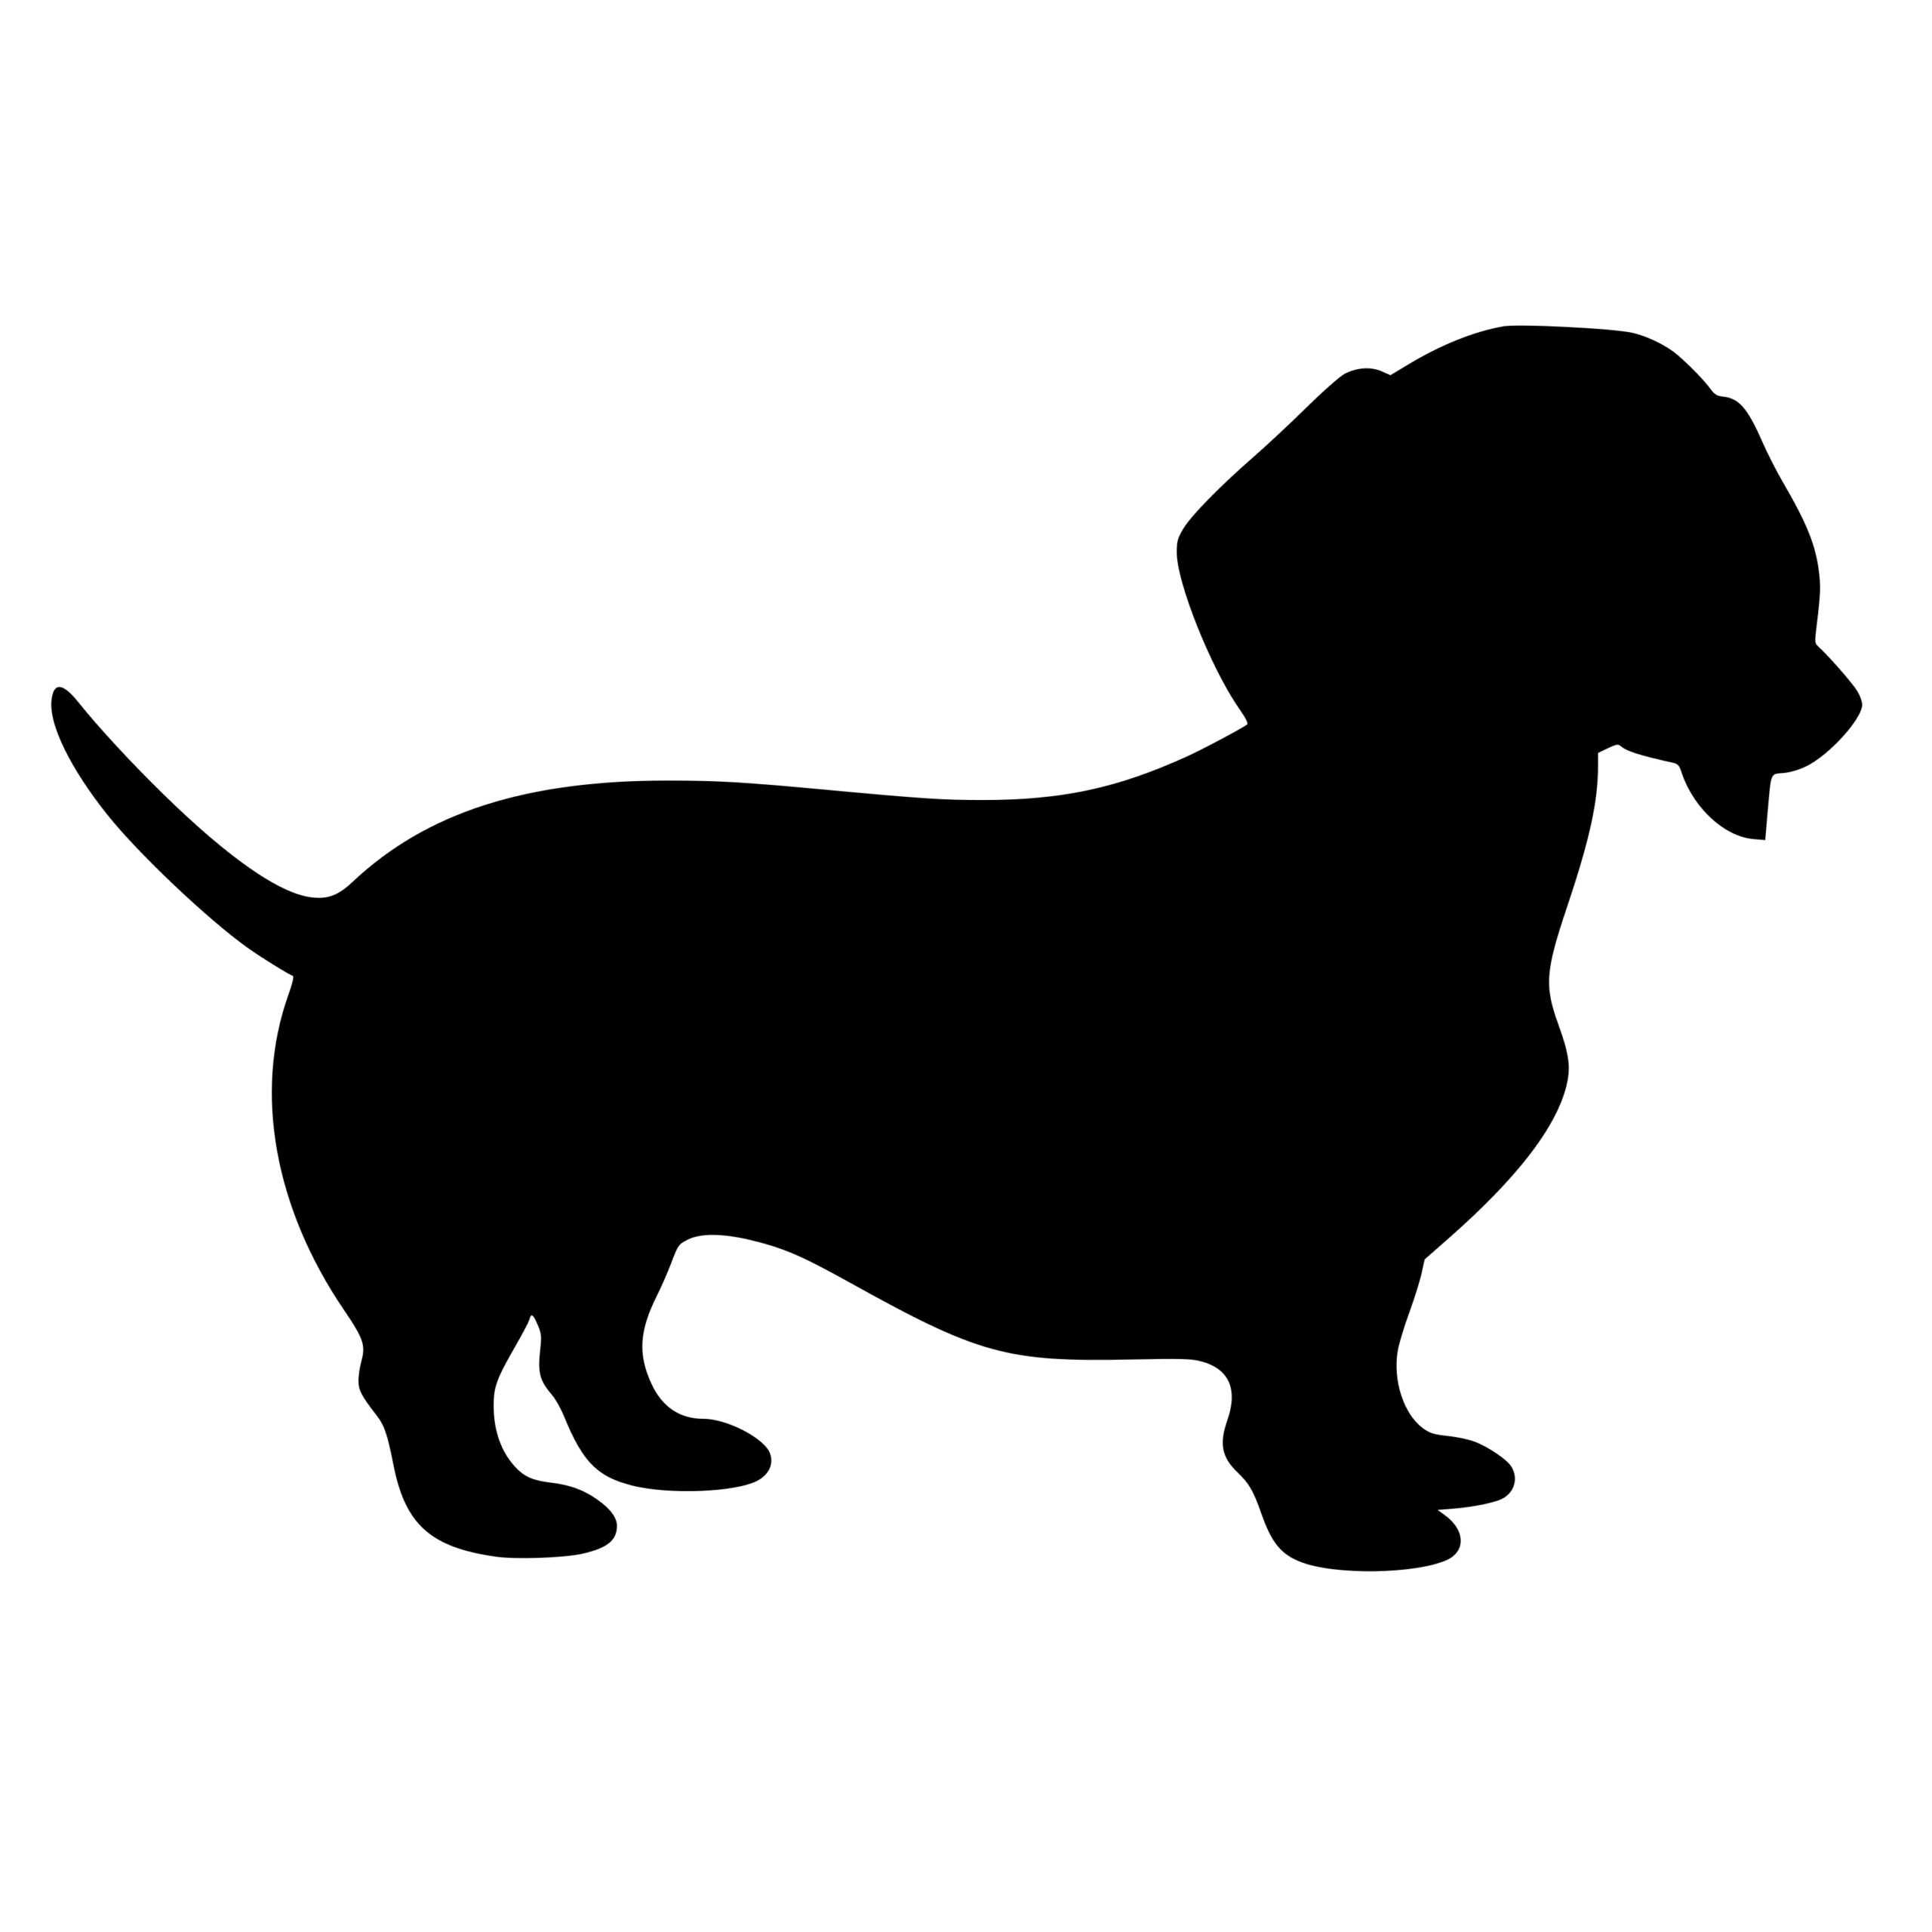 Little Wiener Dog SVG File for Cricut, Silhouette, Laser Machines